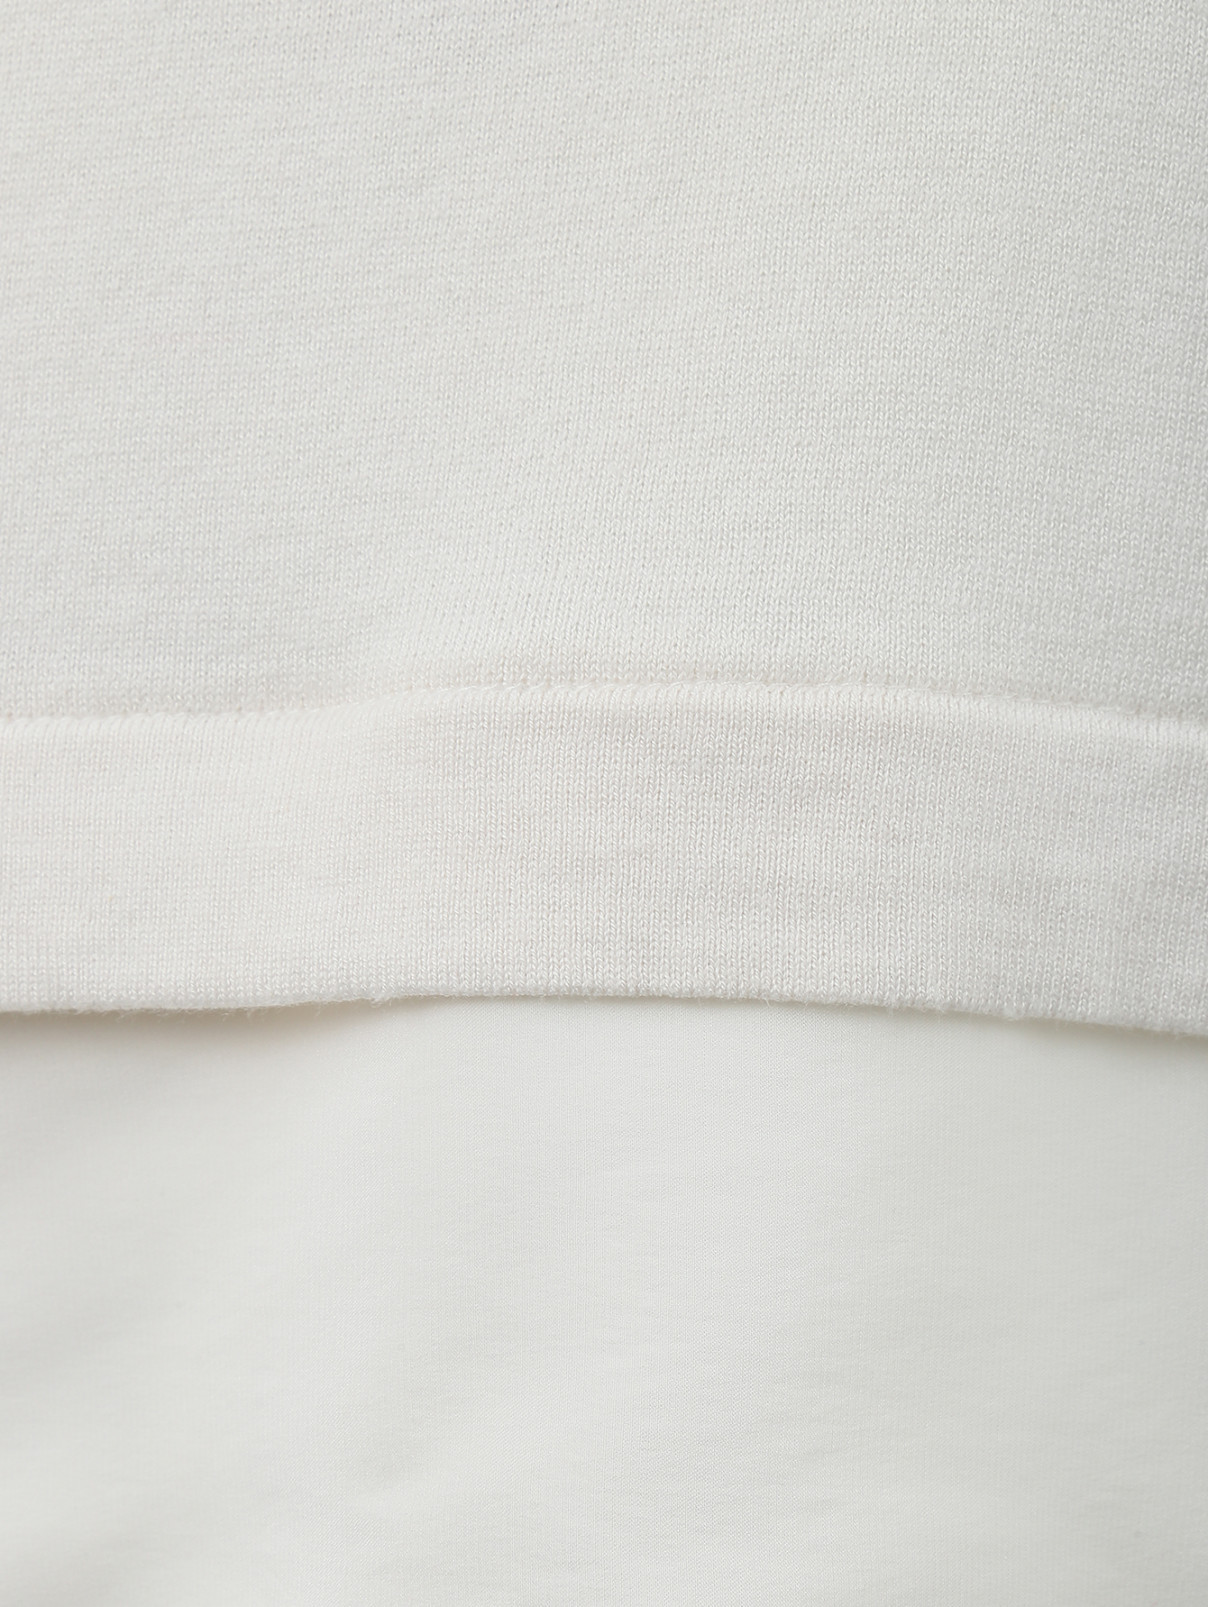 Джемпер из шелка и хлопка Marina Rinaldi  –  Деталь  – Цвет:  Белый